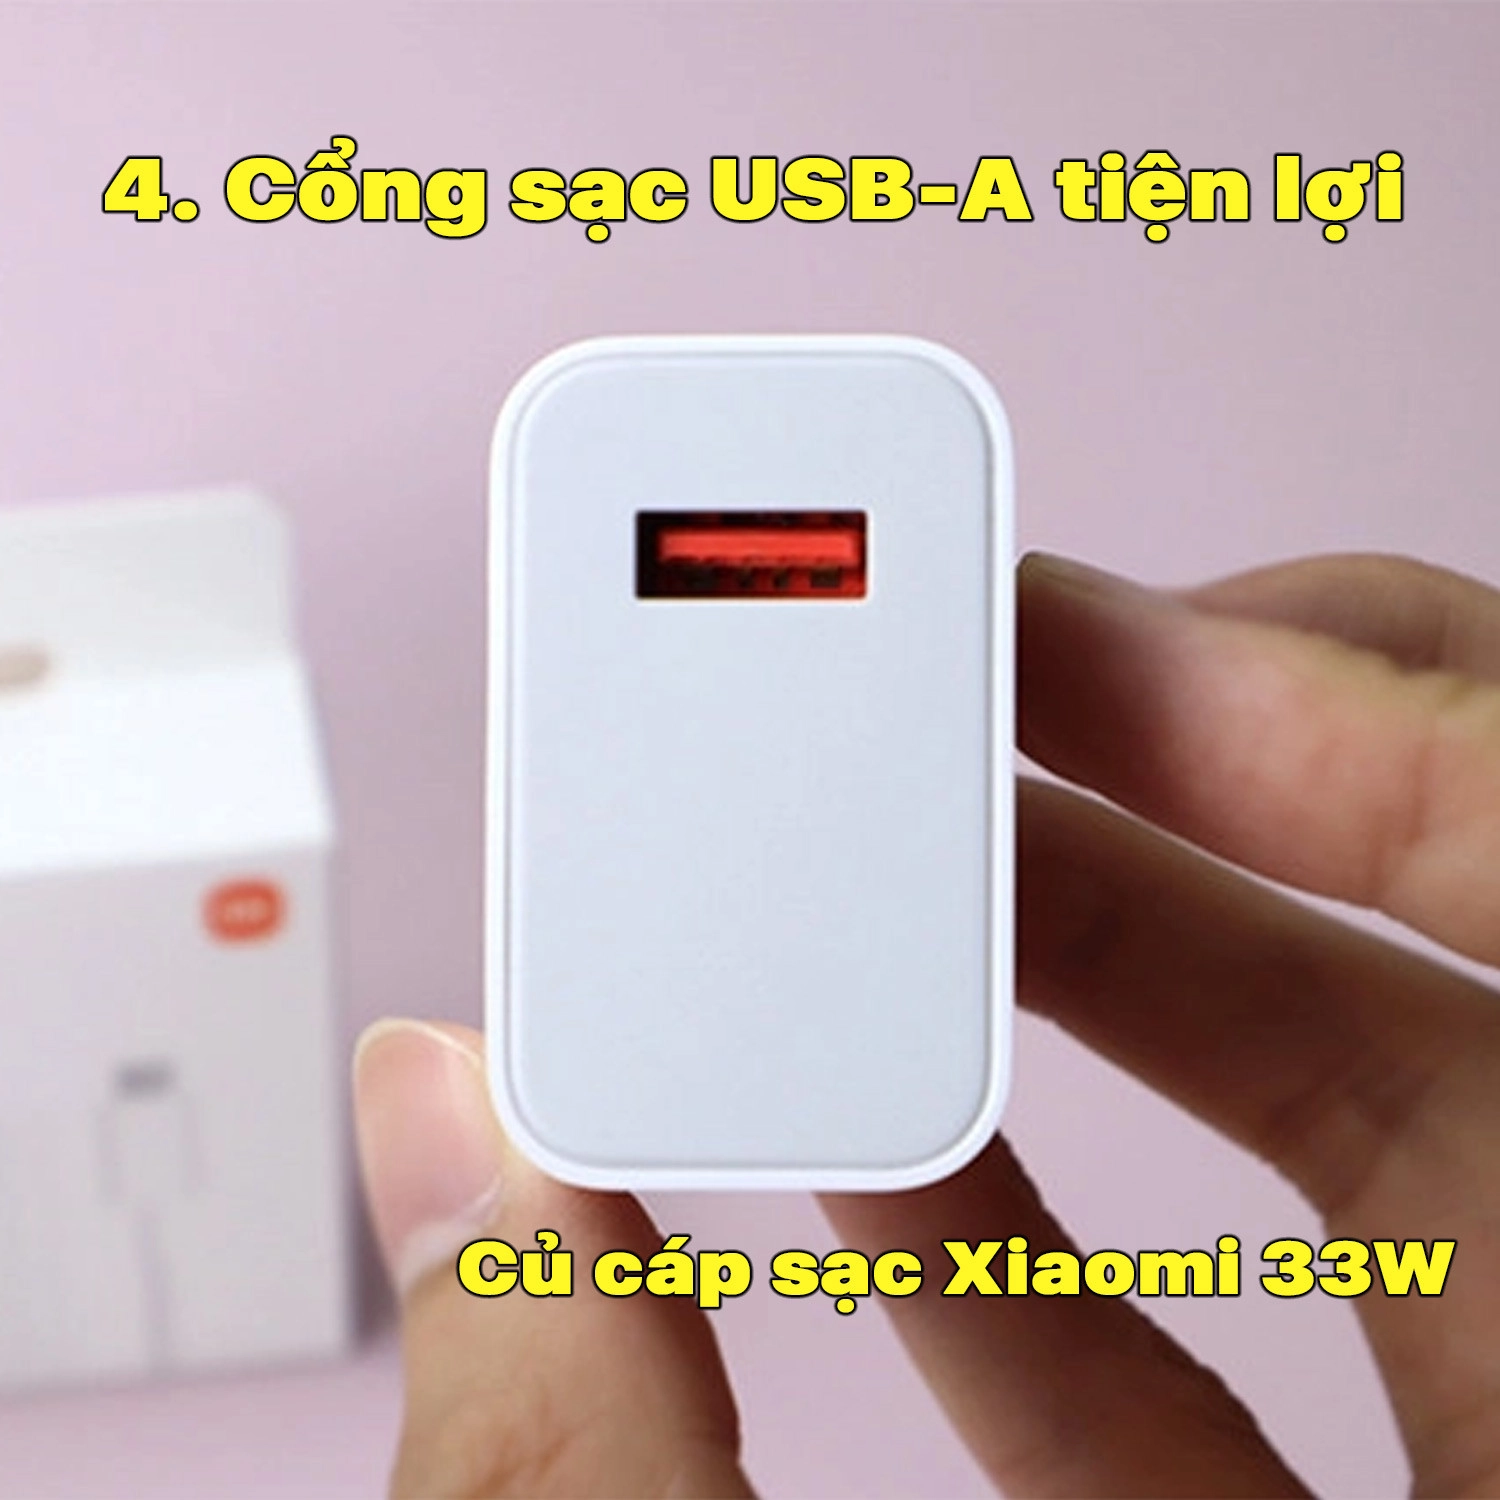 Củ cáp sạc Xiaomi 33W Cổng sạc USB-A tiện lợi